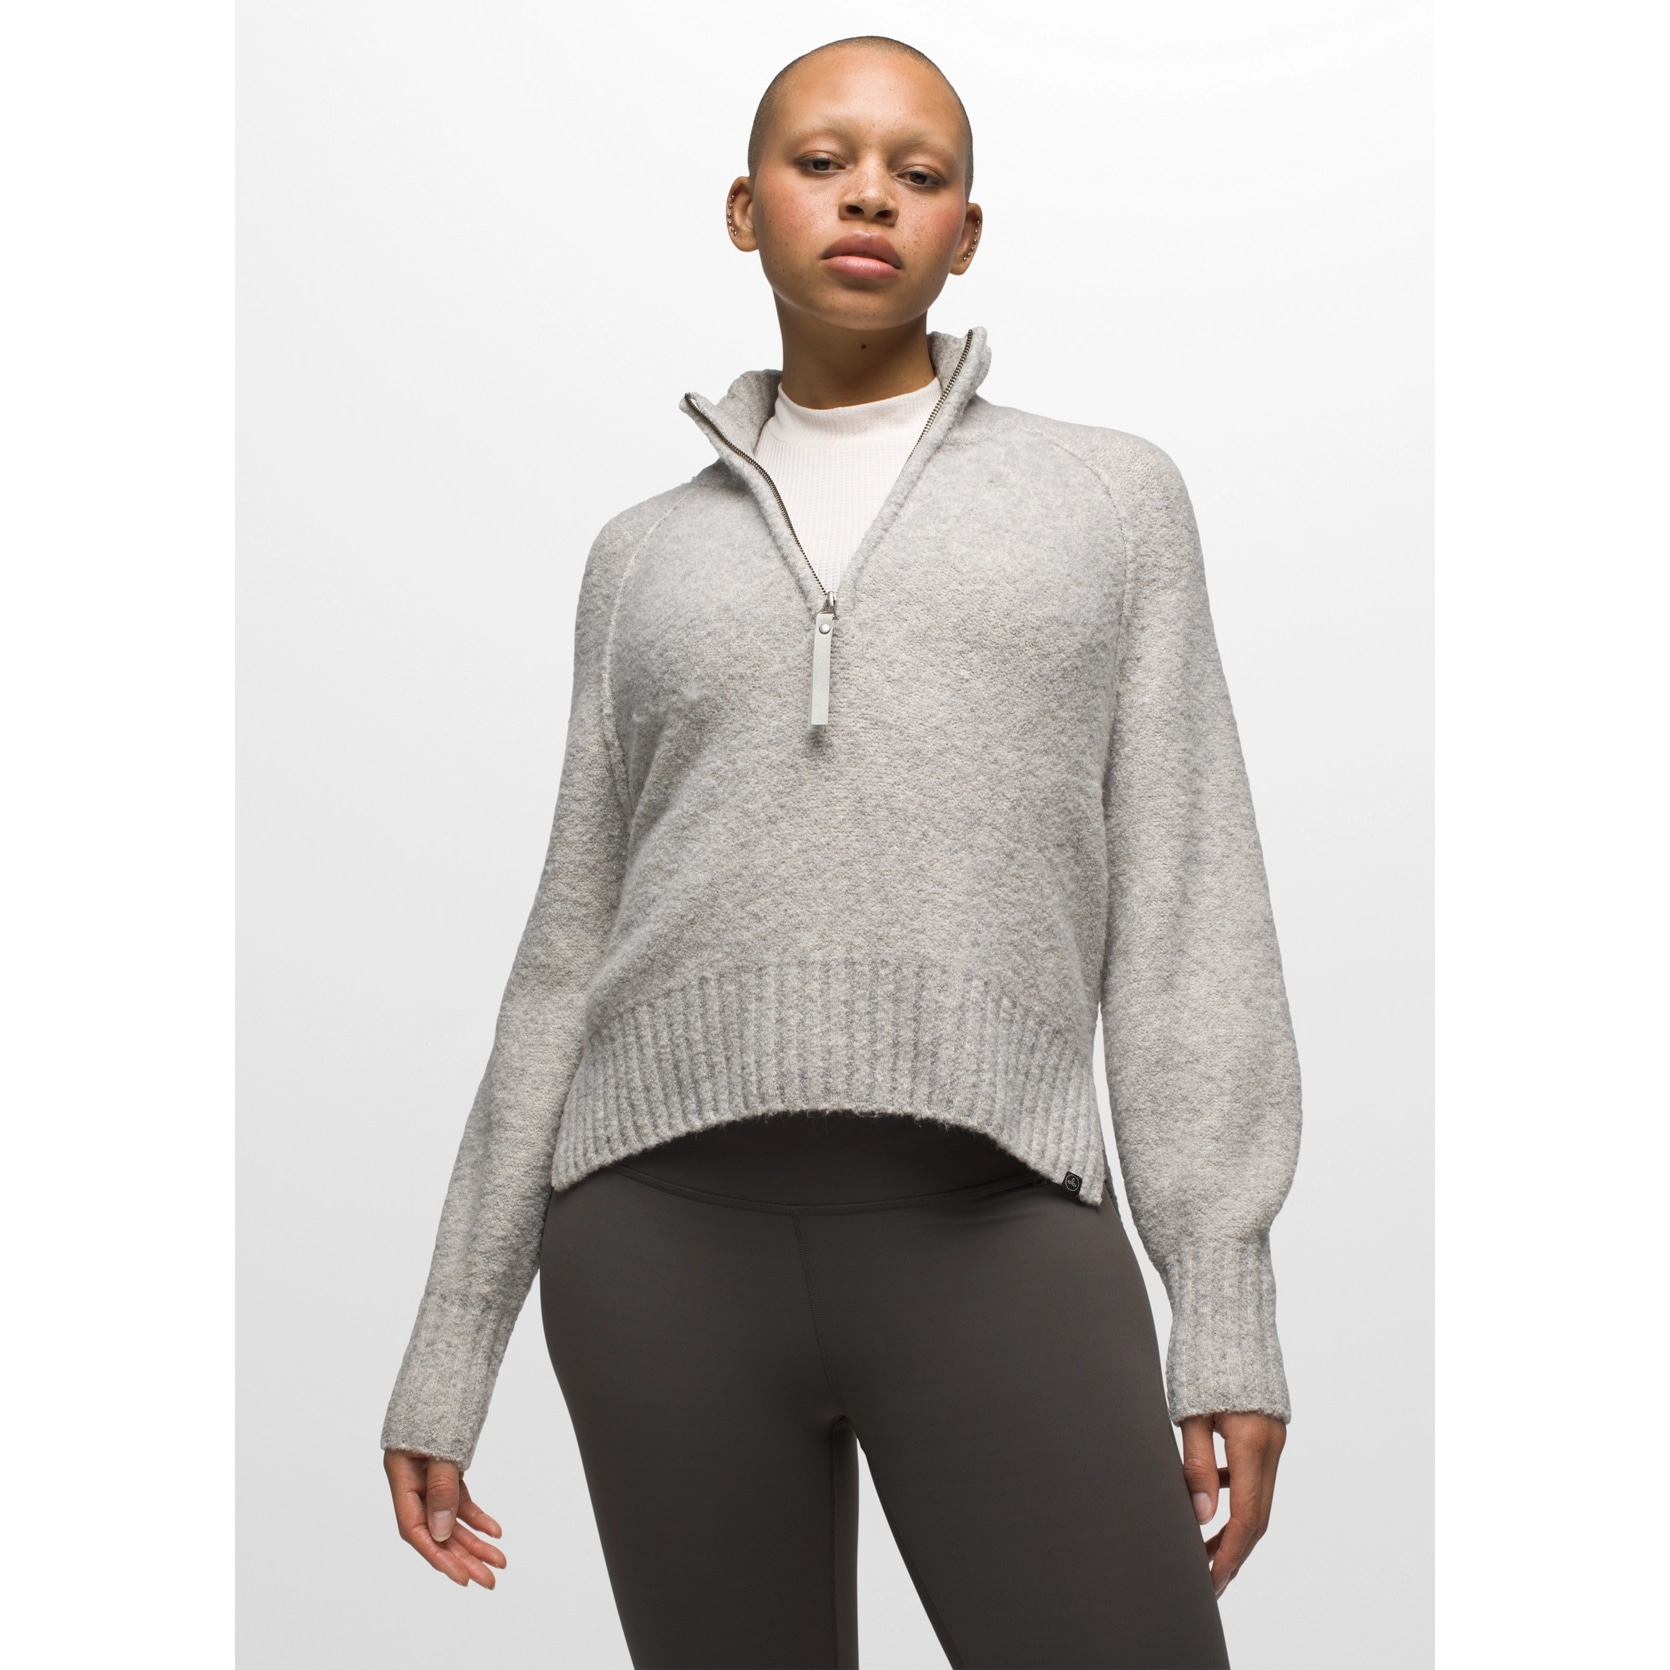 Women's Blazing Star Sweater